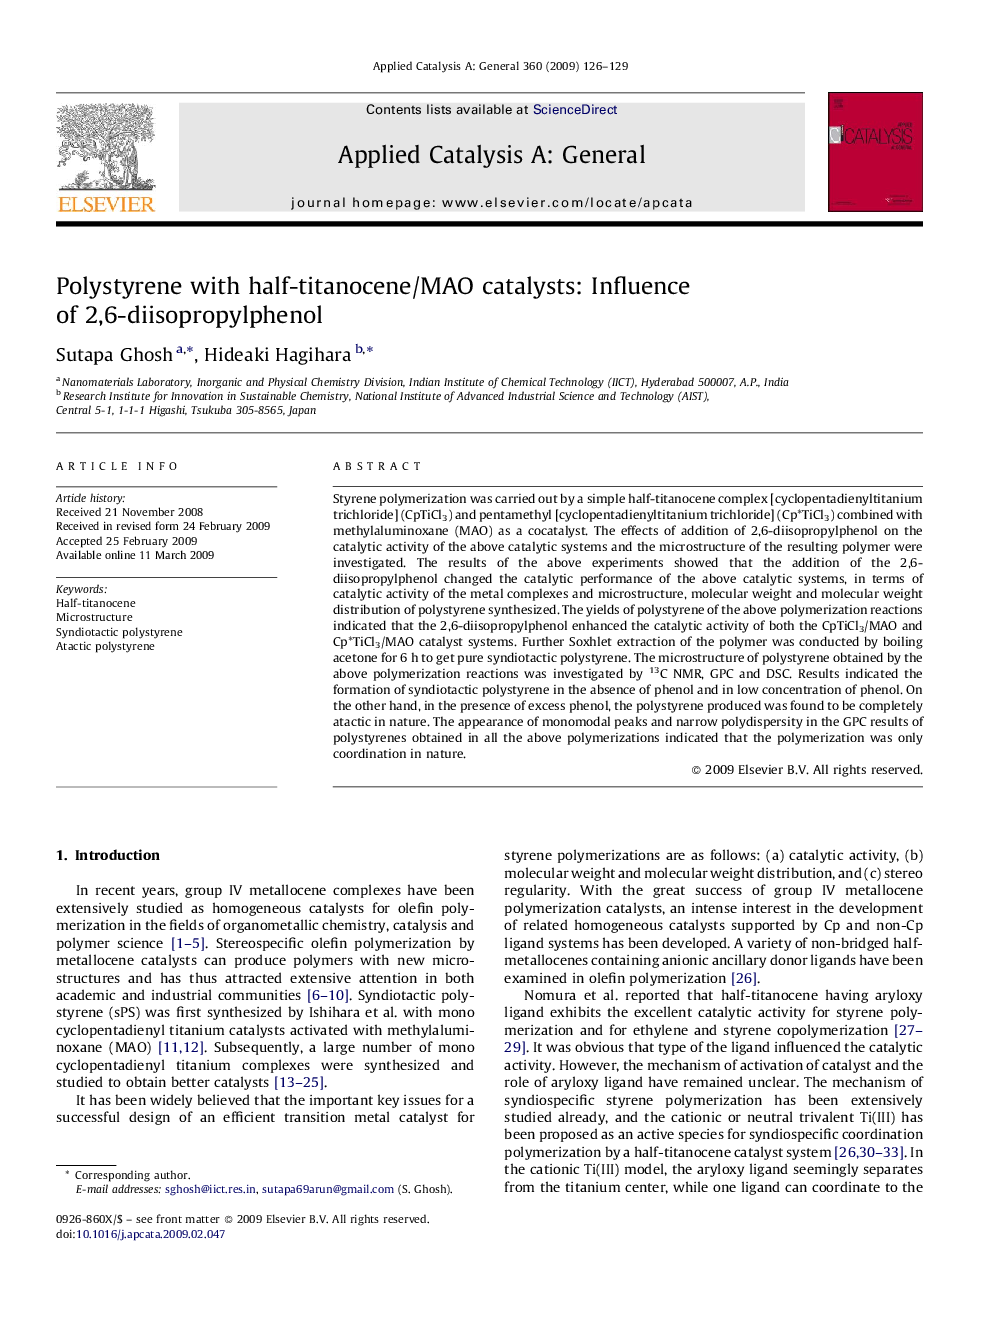 Polystyrene with half-titanocene/MAO catalysts: Influence of 2,6-diisopropylphenol